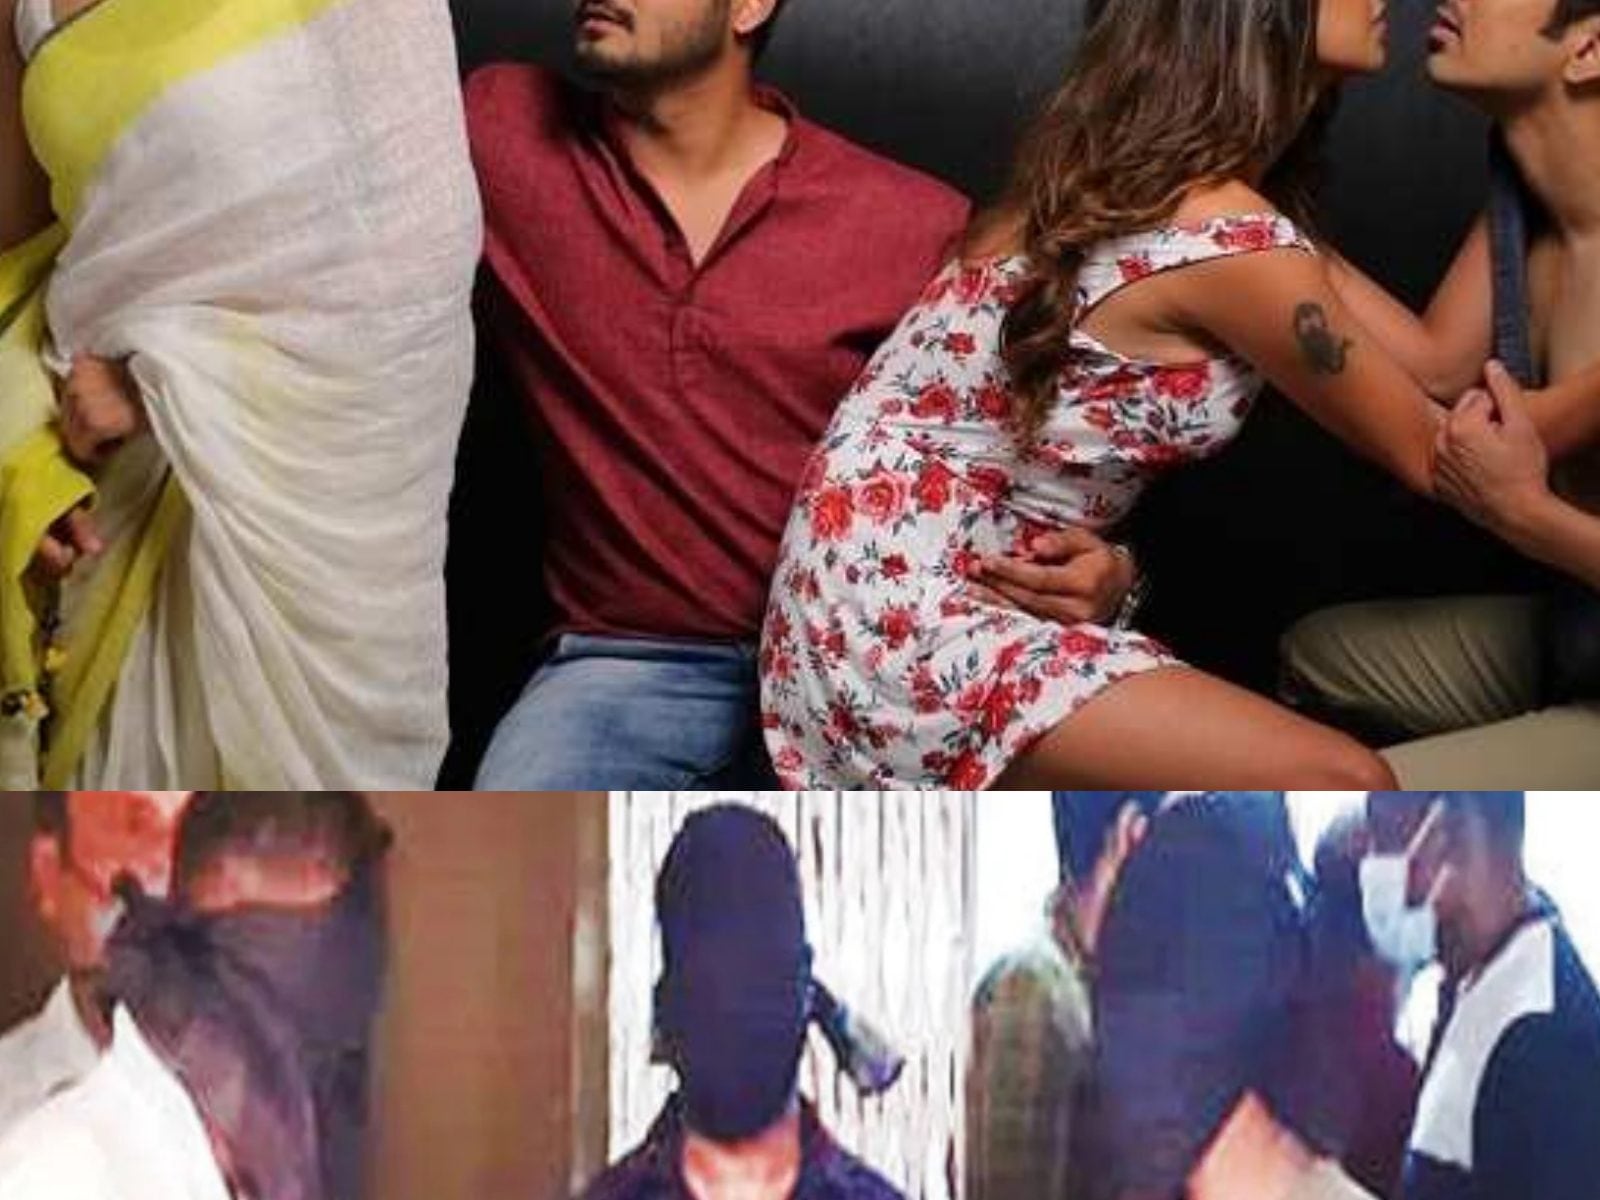 Wife swap భార్యలను మార్చుకుంటూ బరితెగింపు సెక్స్ -1000 జంటల వికృత రాసలీల Kerala Wife swap racket busted Kerala police arrest seven people involved in partner swapping mks– News18 Telugu